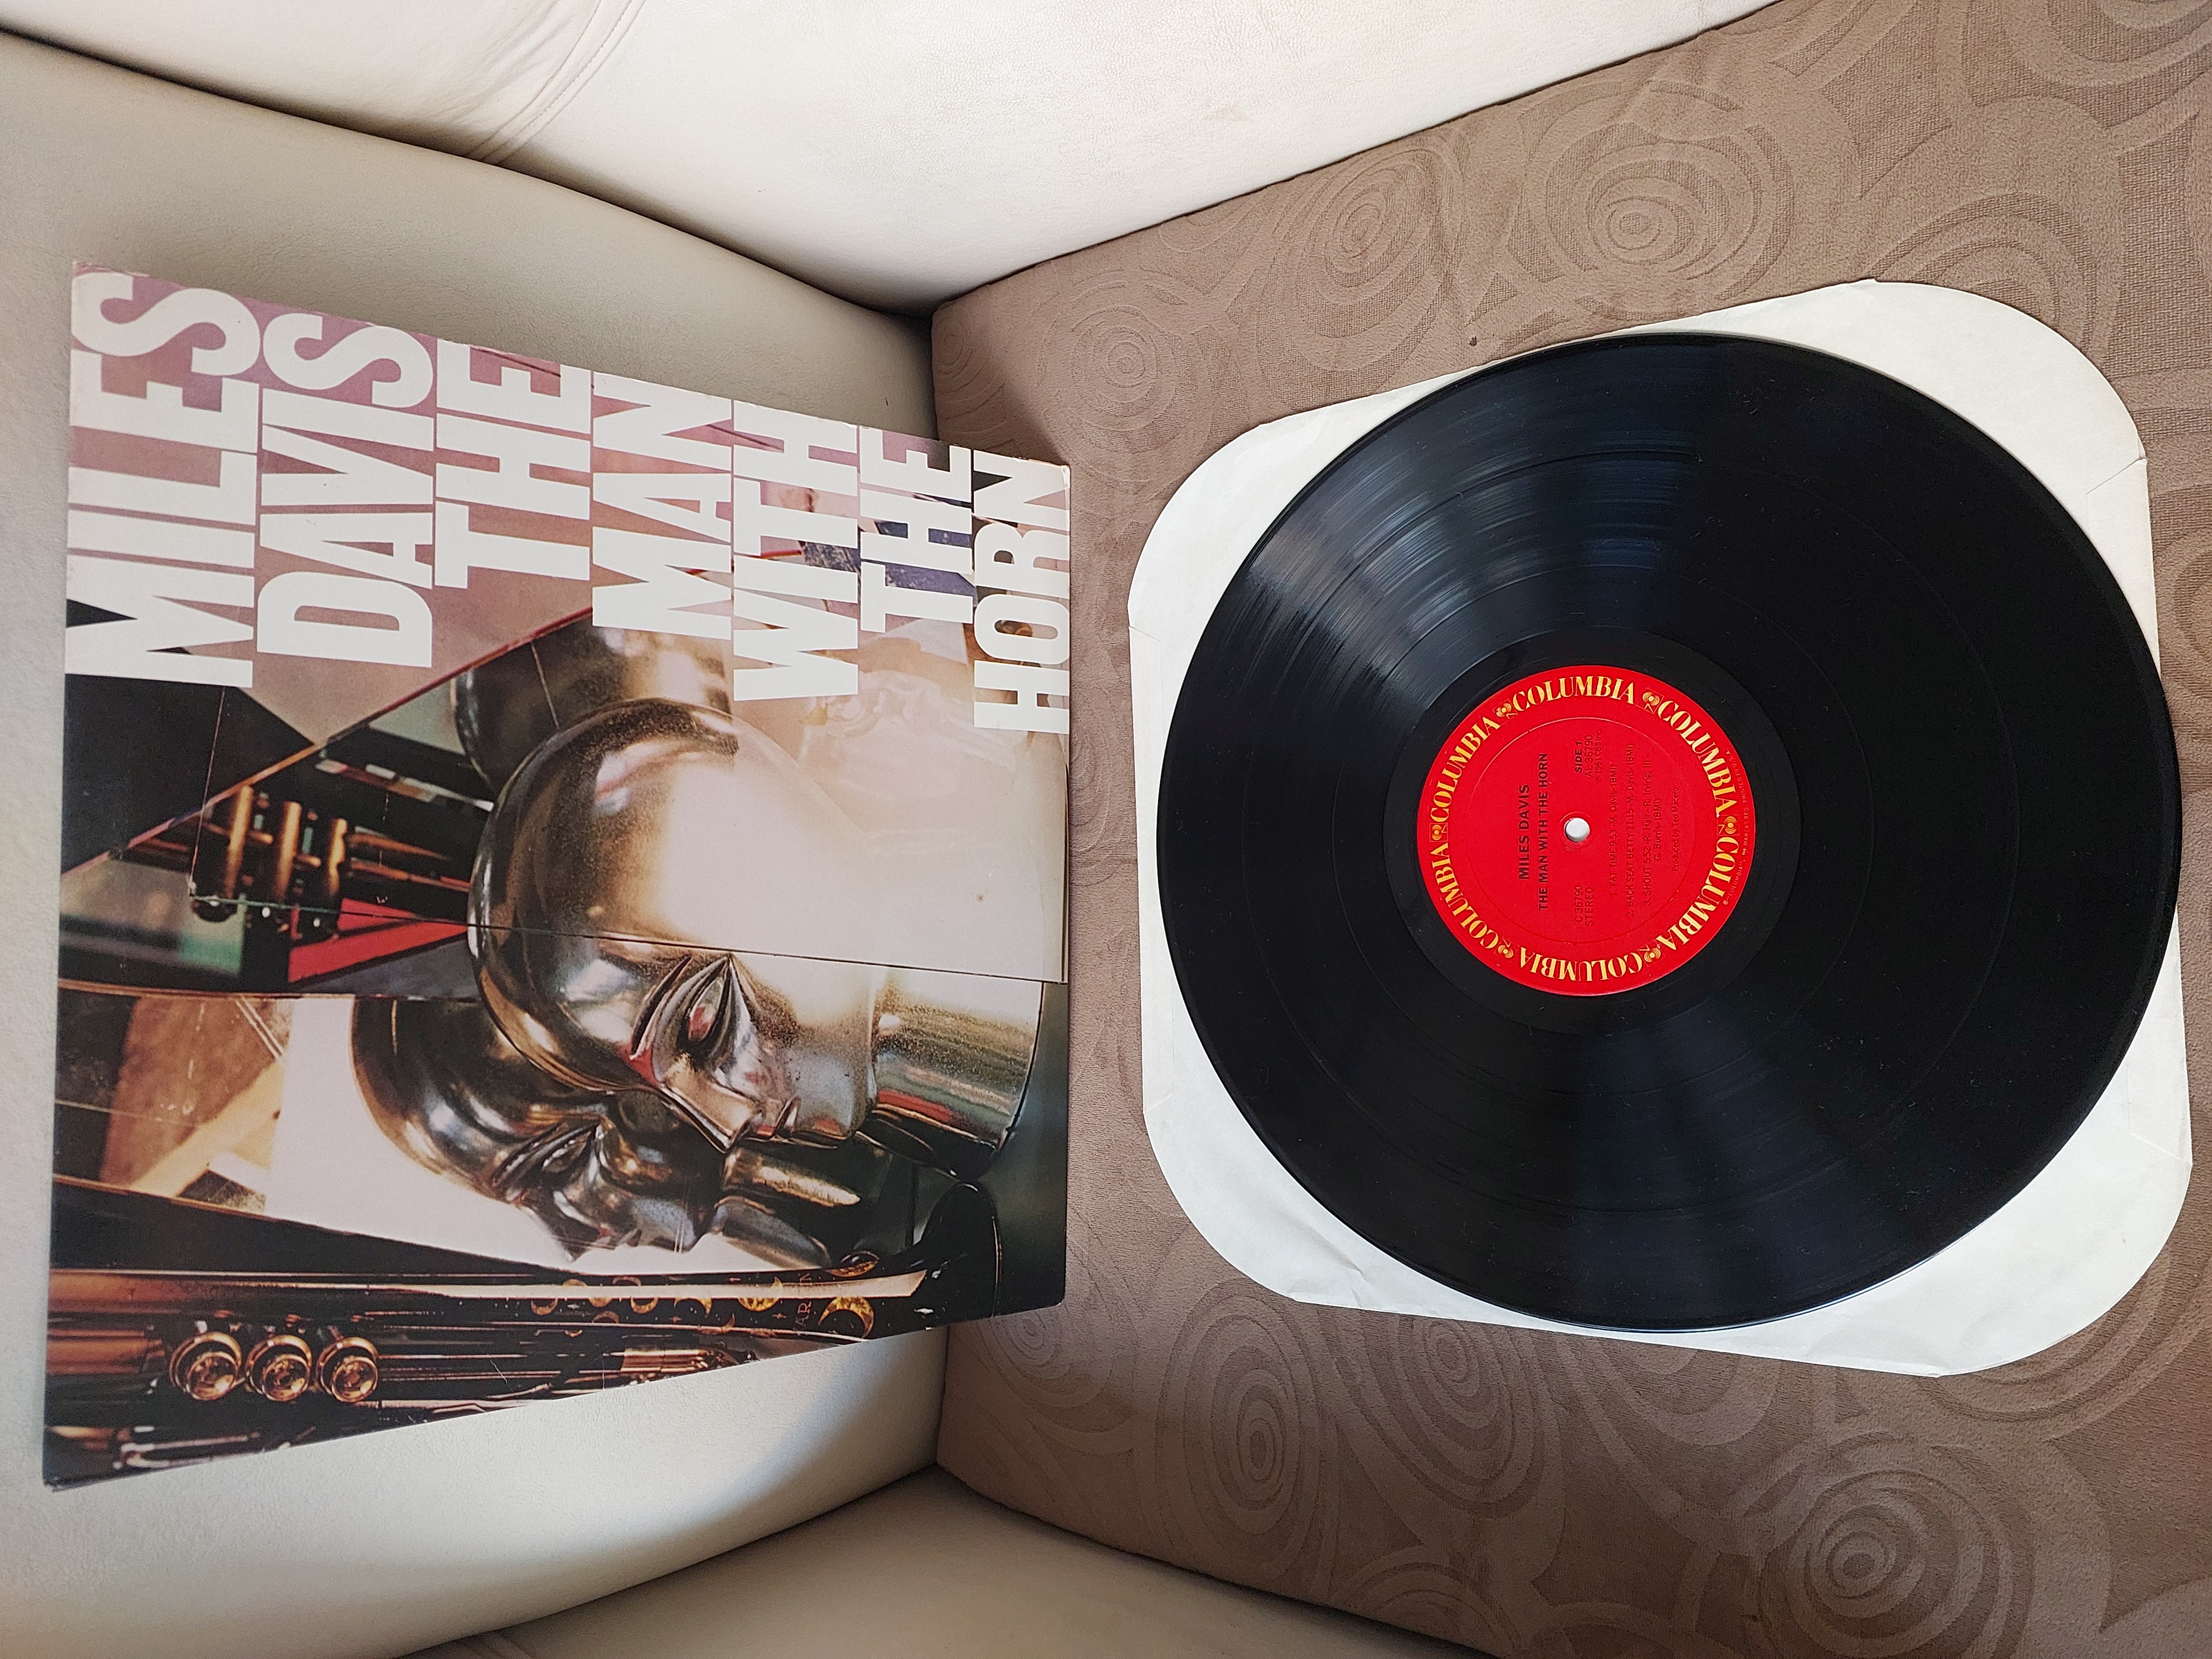 Miles Davis – The Man With The Horn -1981 USA Basım Albüm -33 lük LP Plak